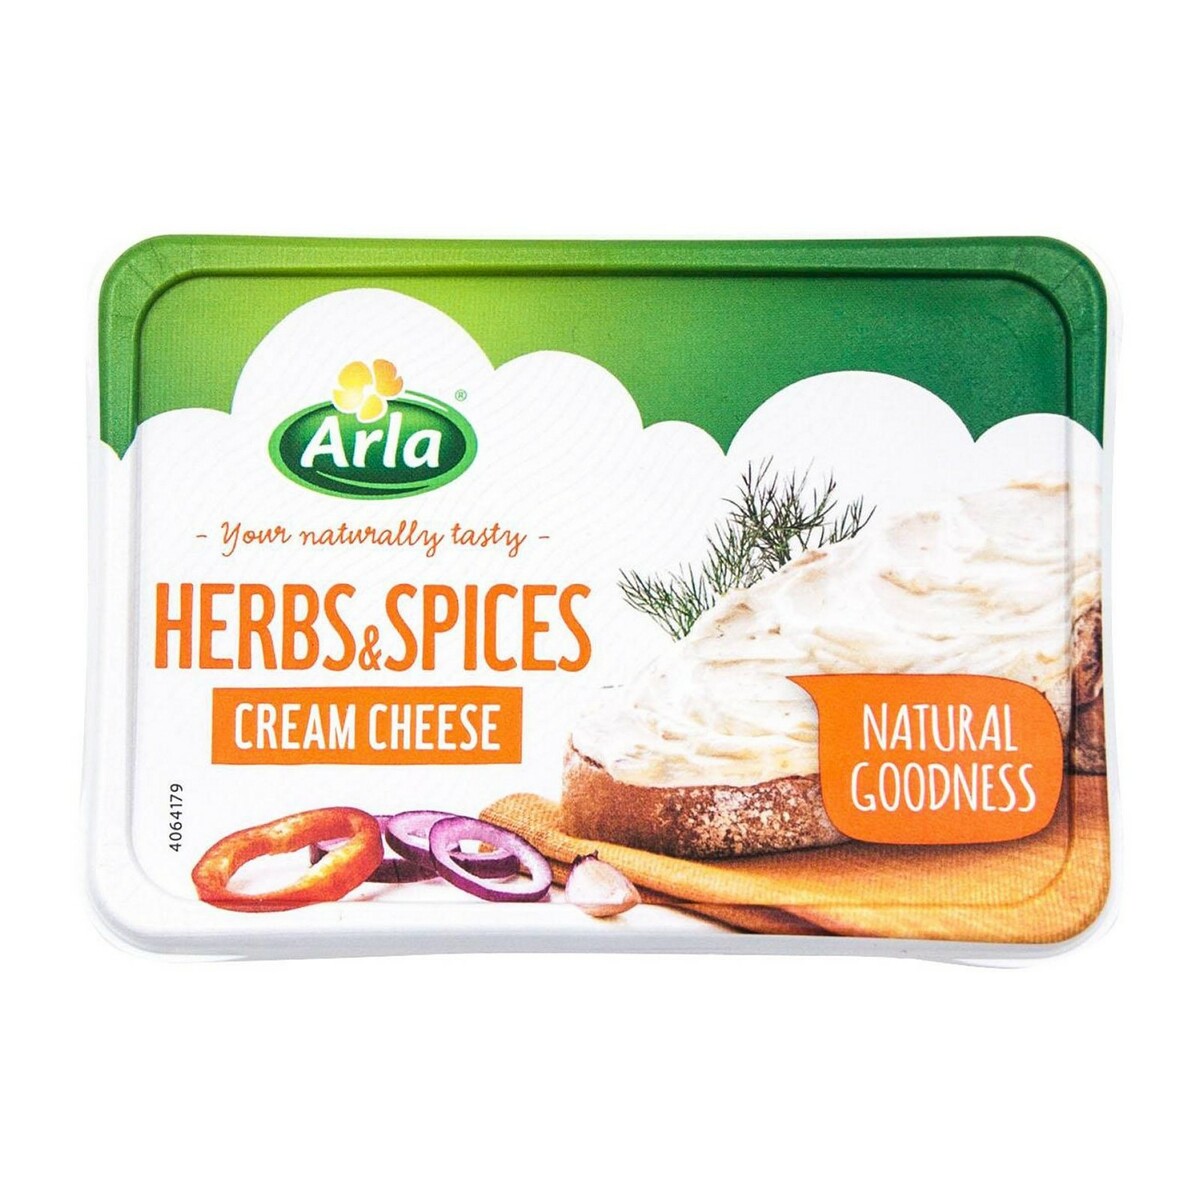 Arla Herbs & Spices Cream Cheese 150g